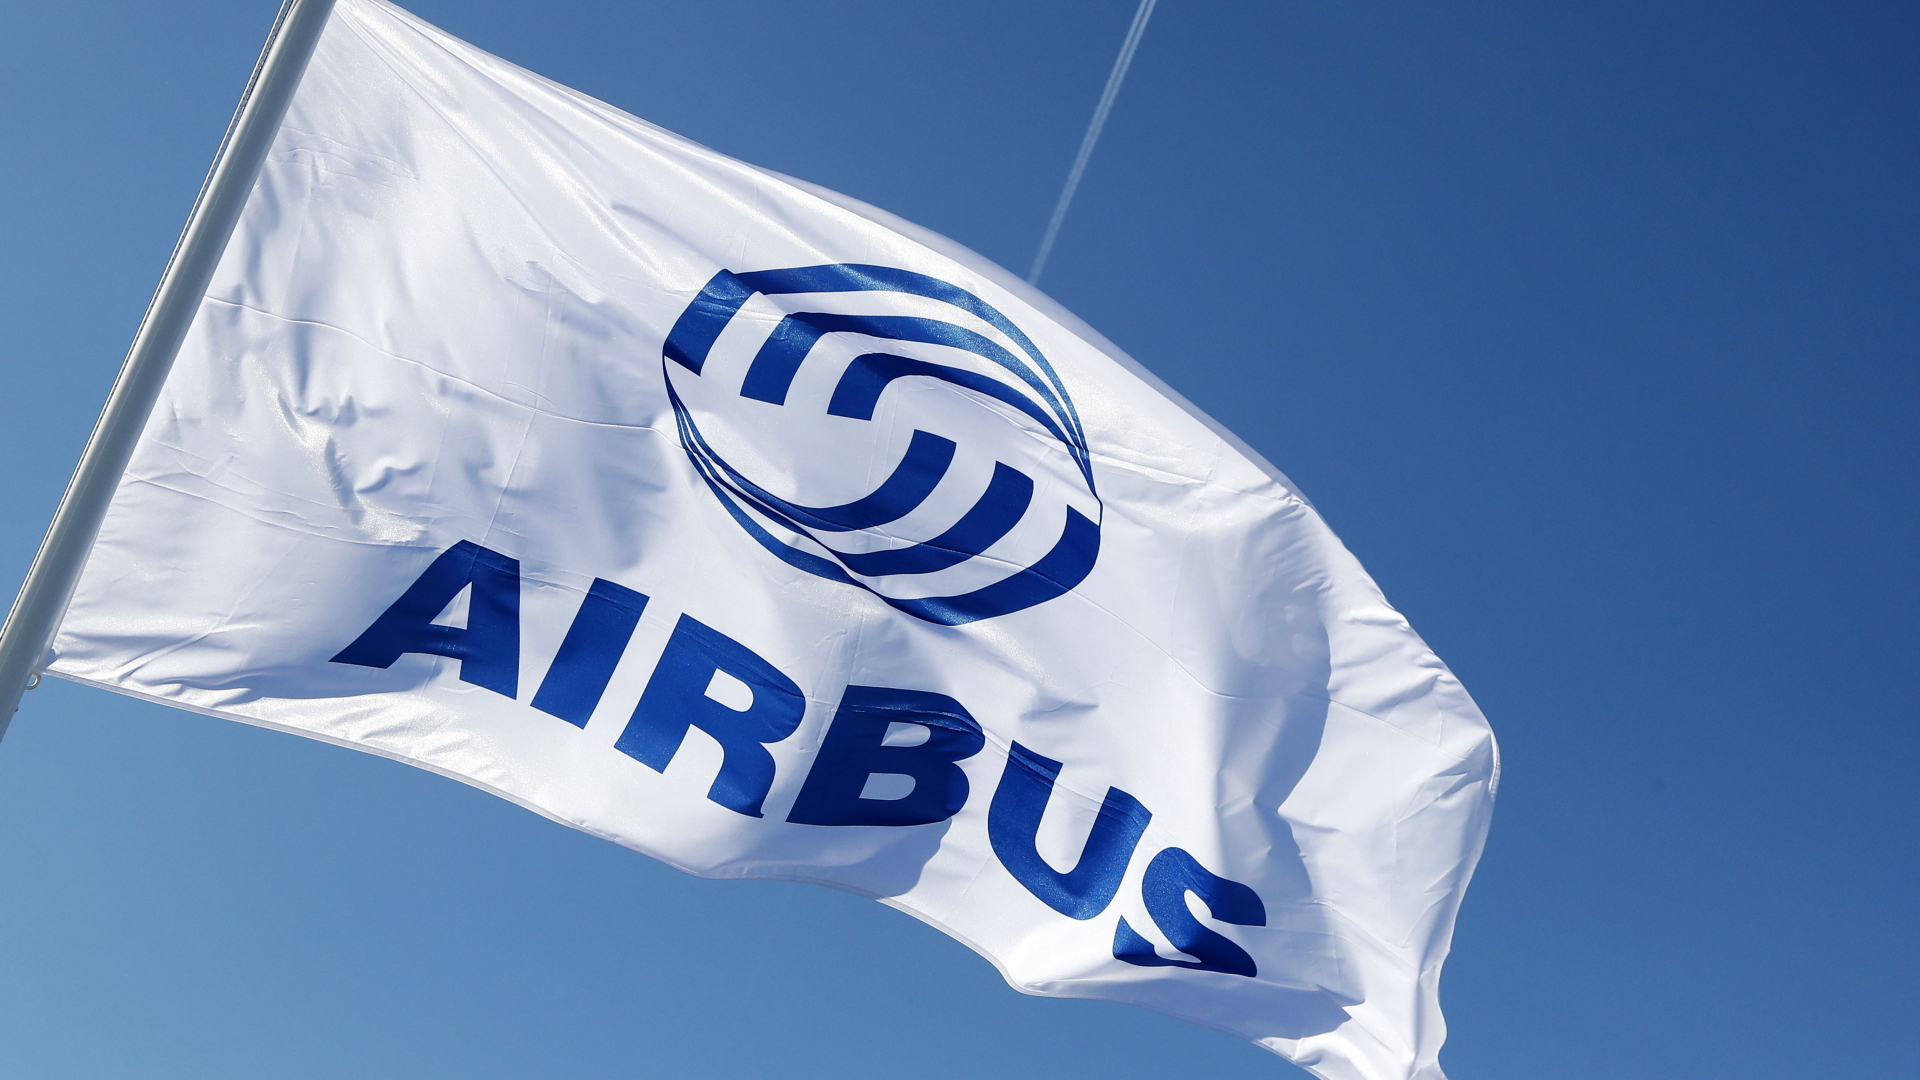 Wehende Fahne mit dem Logo des Flugzeugbauers Airbus | Bildquelle: GUILLAUME HORCAJUELO/EPA-EFE/REX